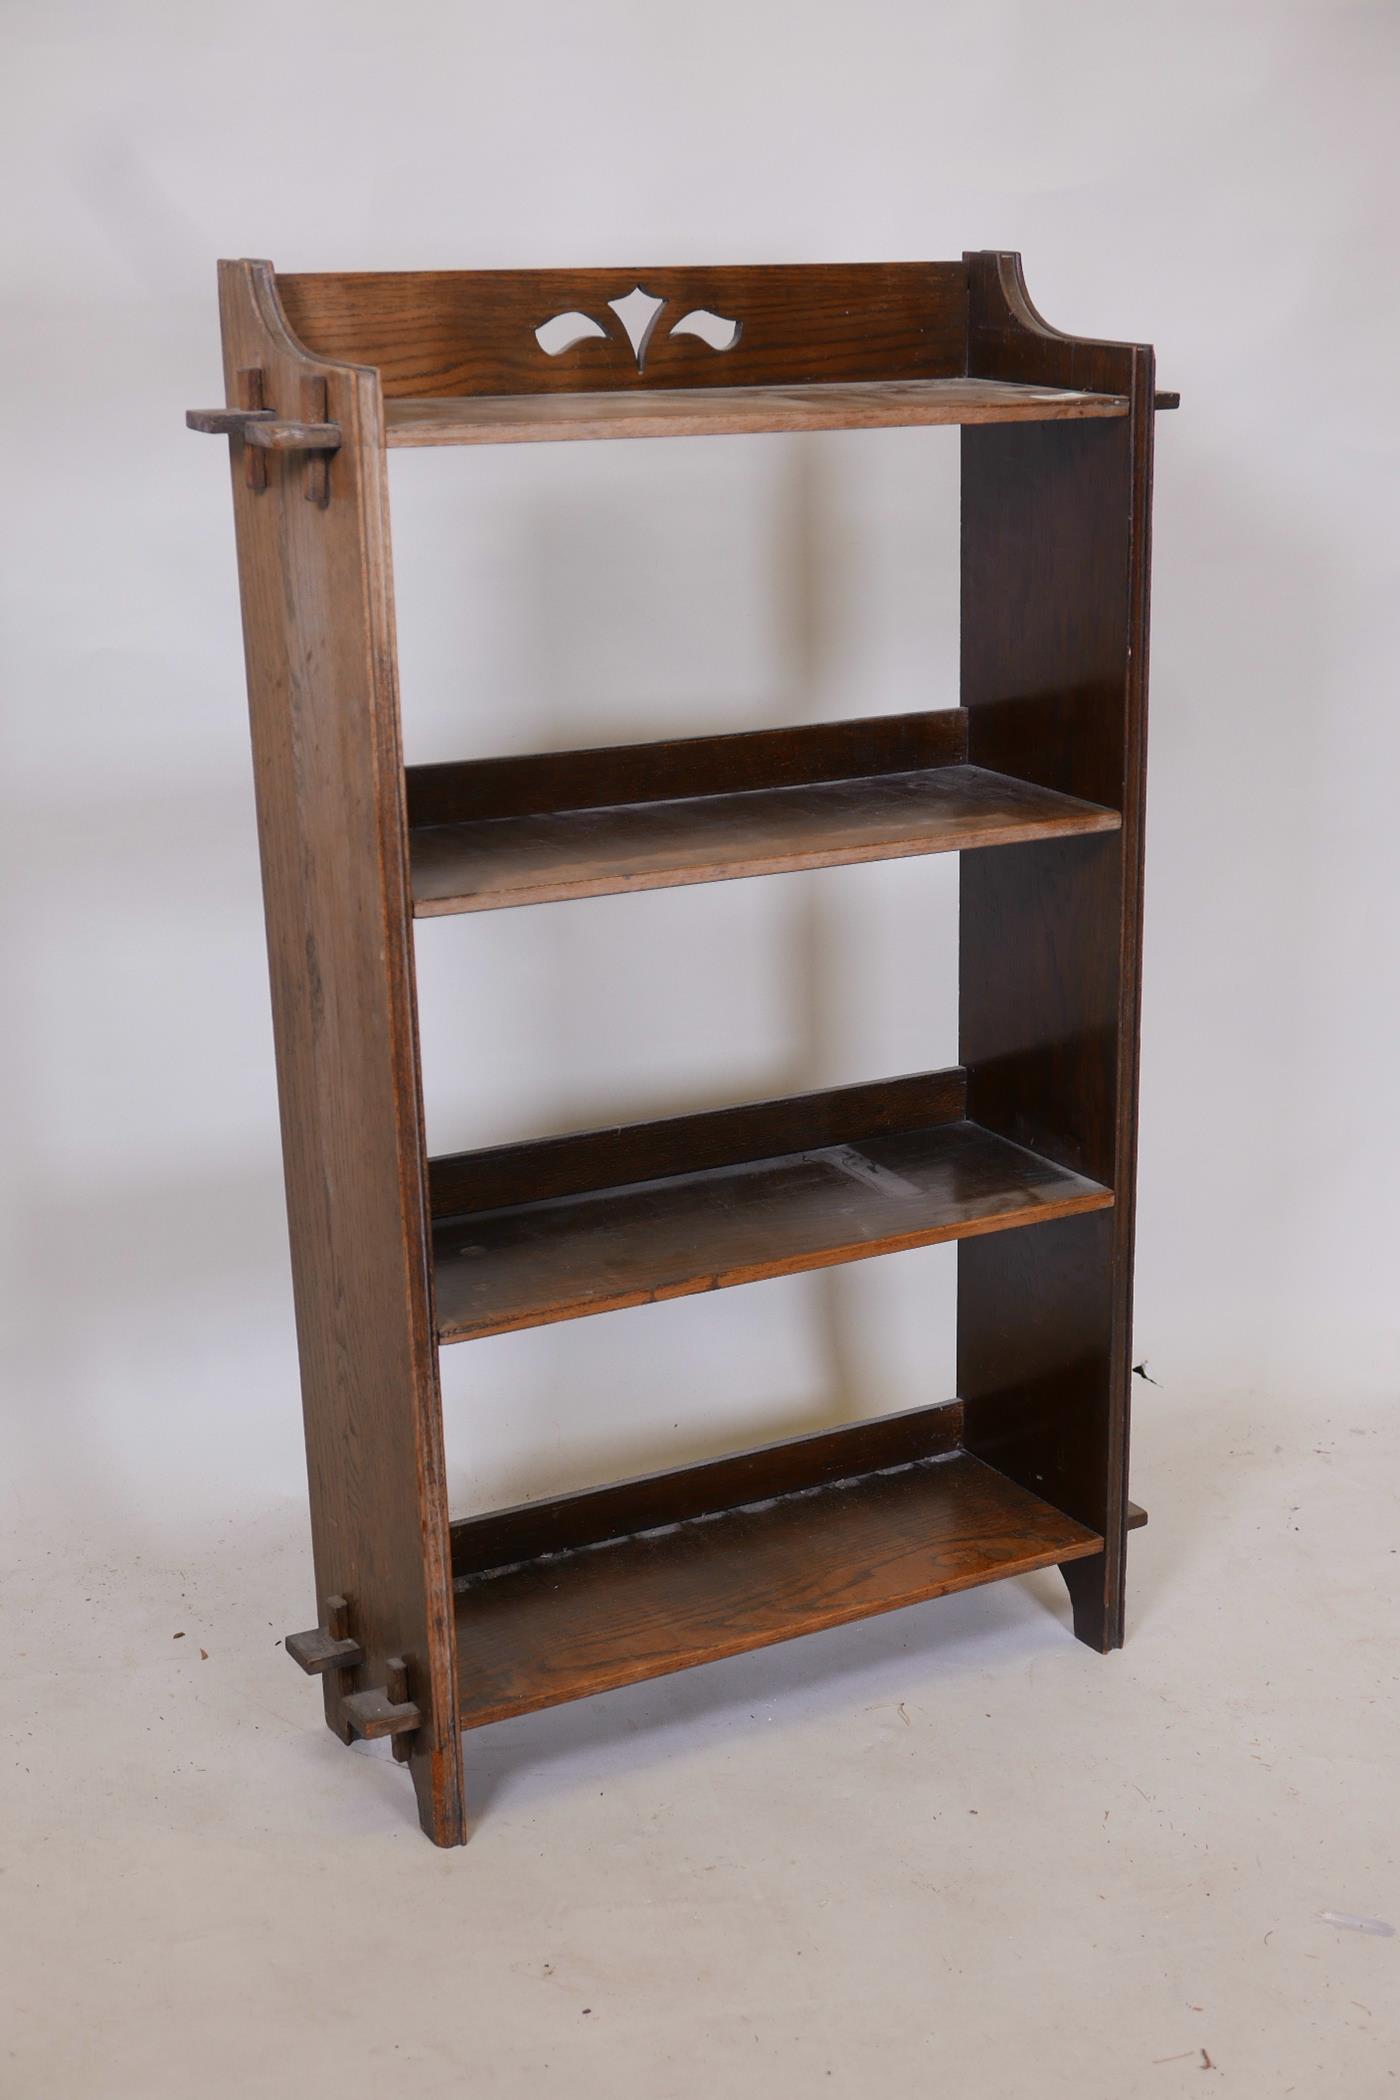 An Edwardian oak open bookcase with peg joined shelves, 25" x 40" x 8"